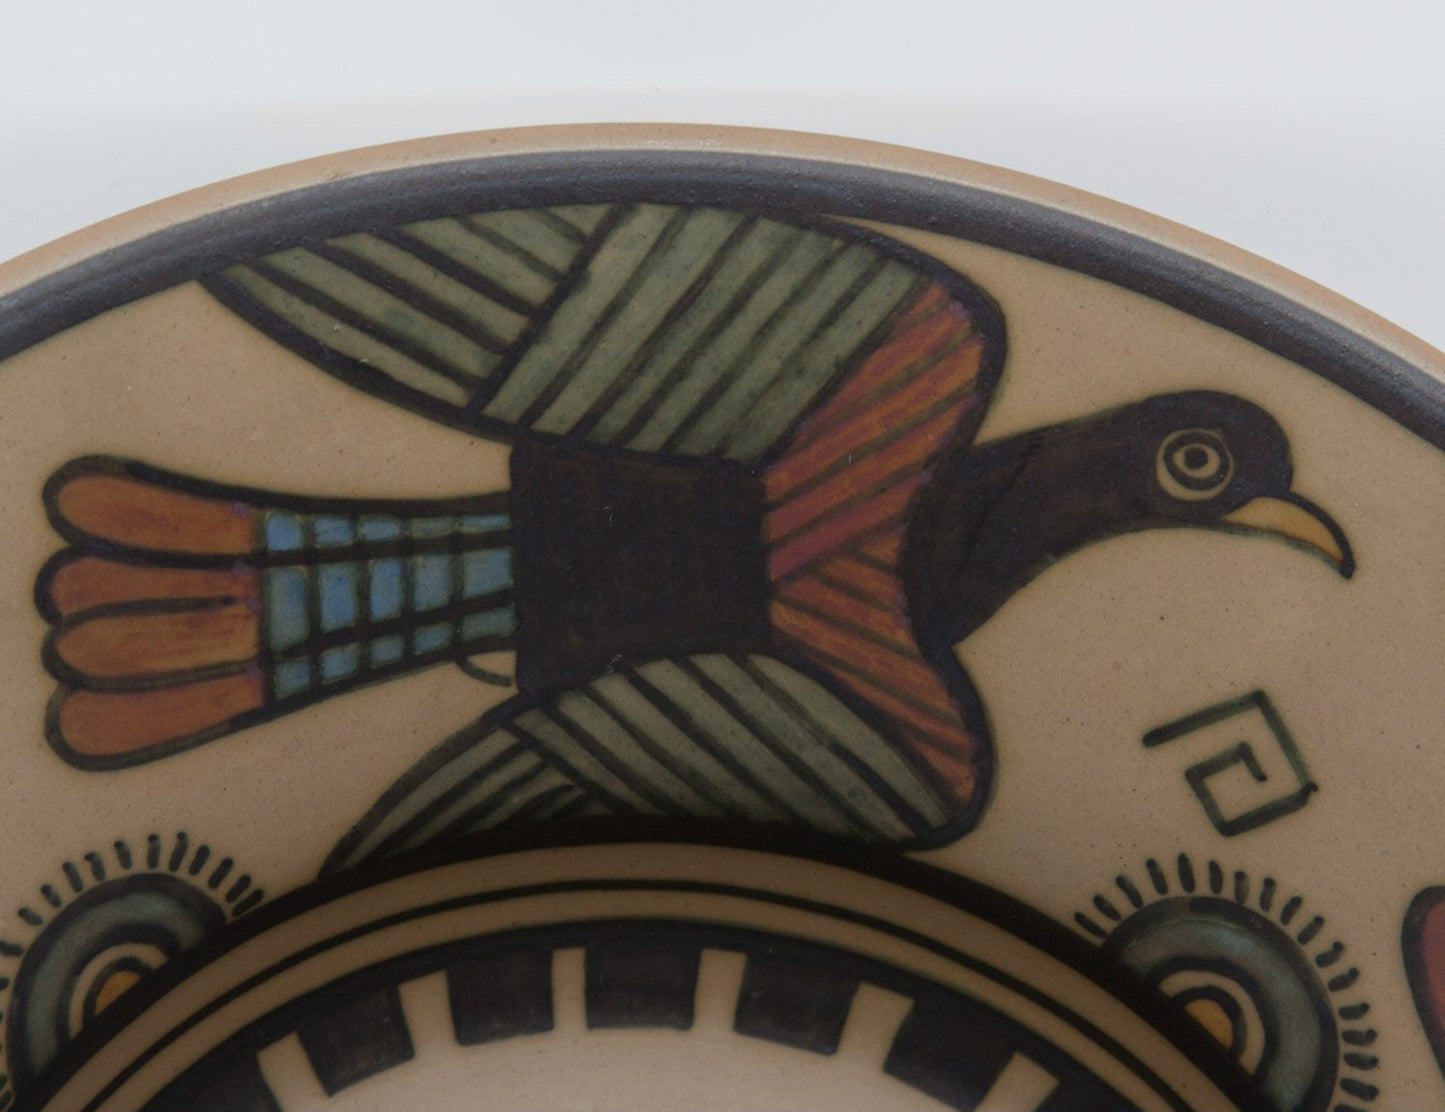 L. HJORTH Decorated Stylized Bird Ceramic Bowl Mollaris.com 